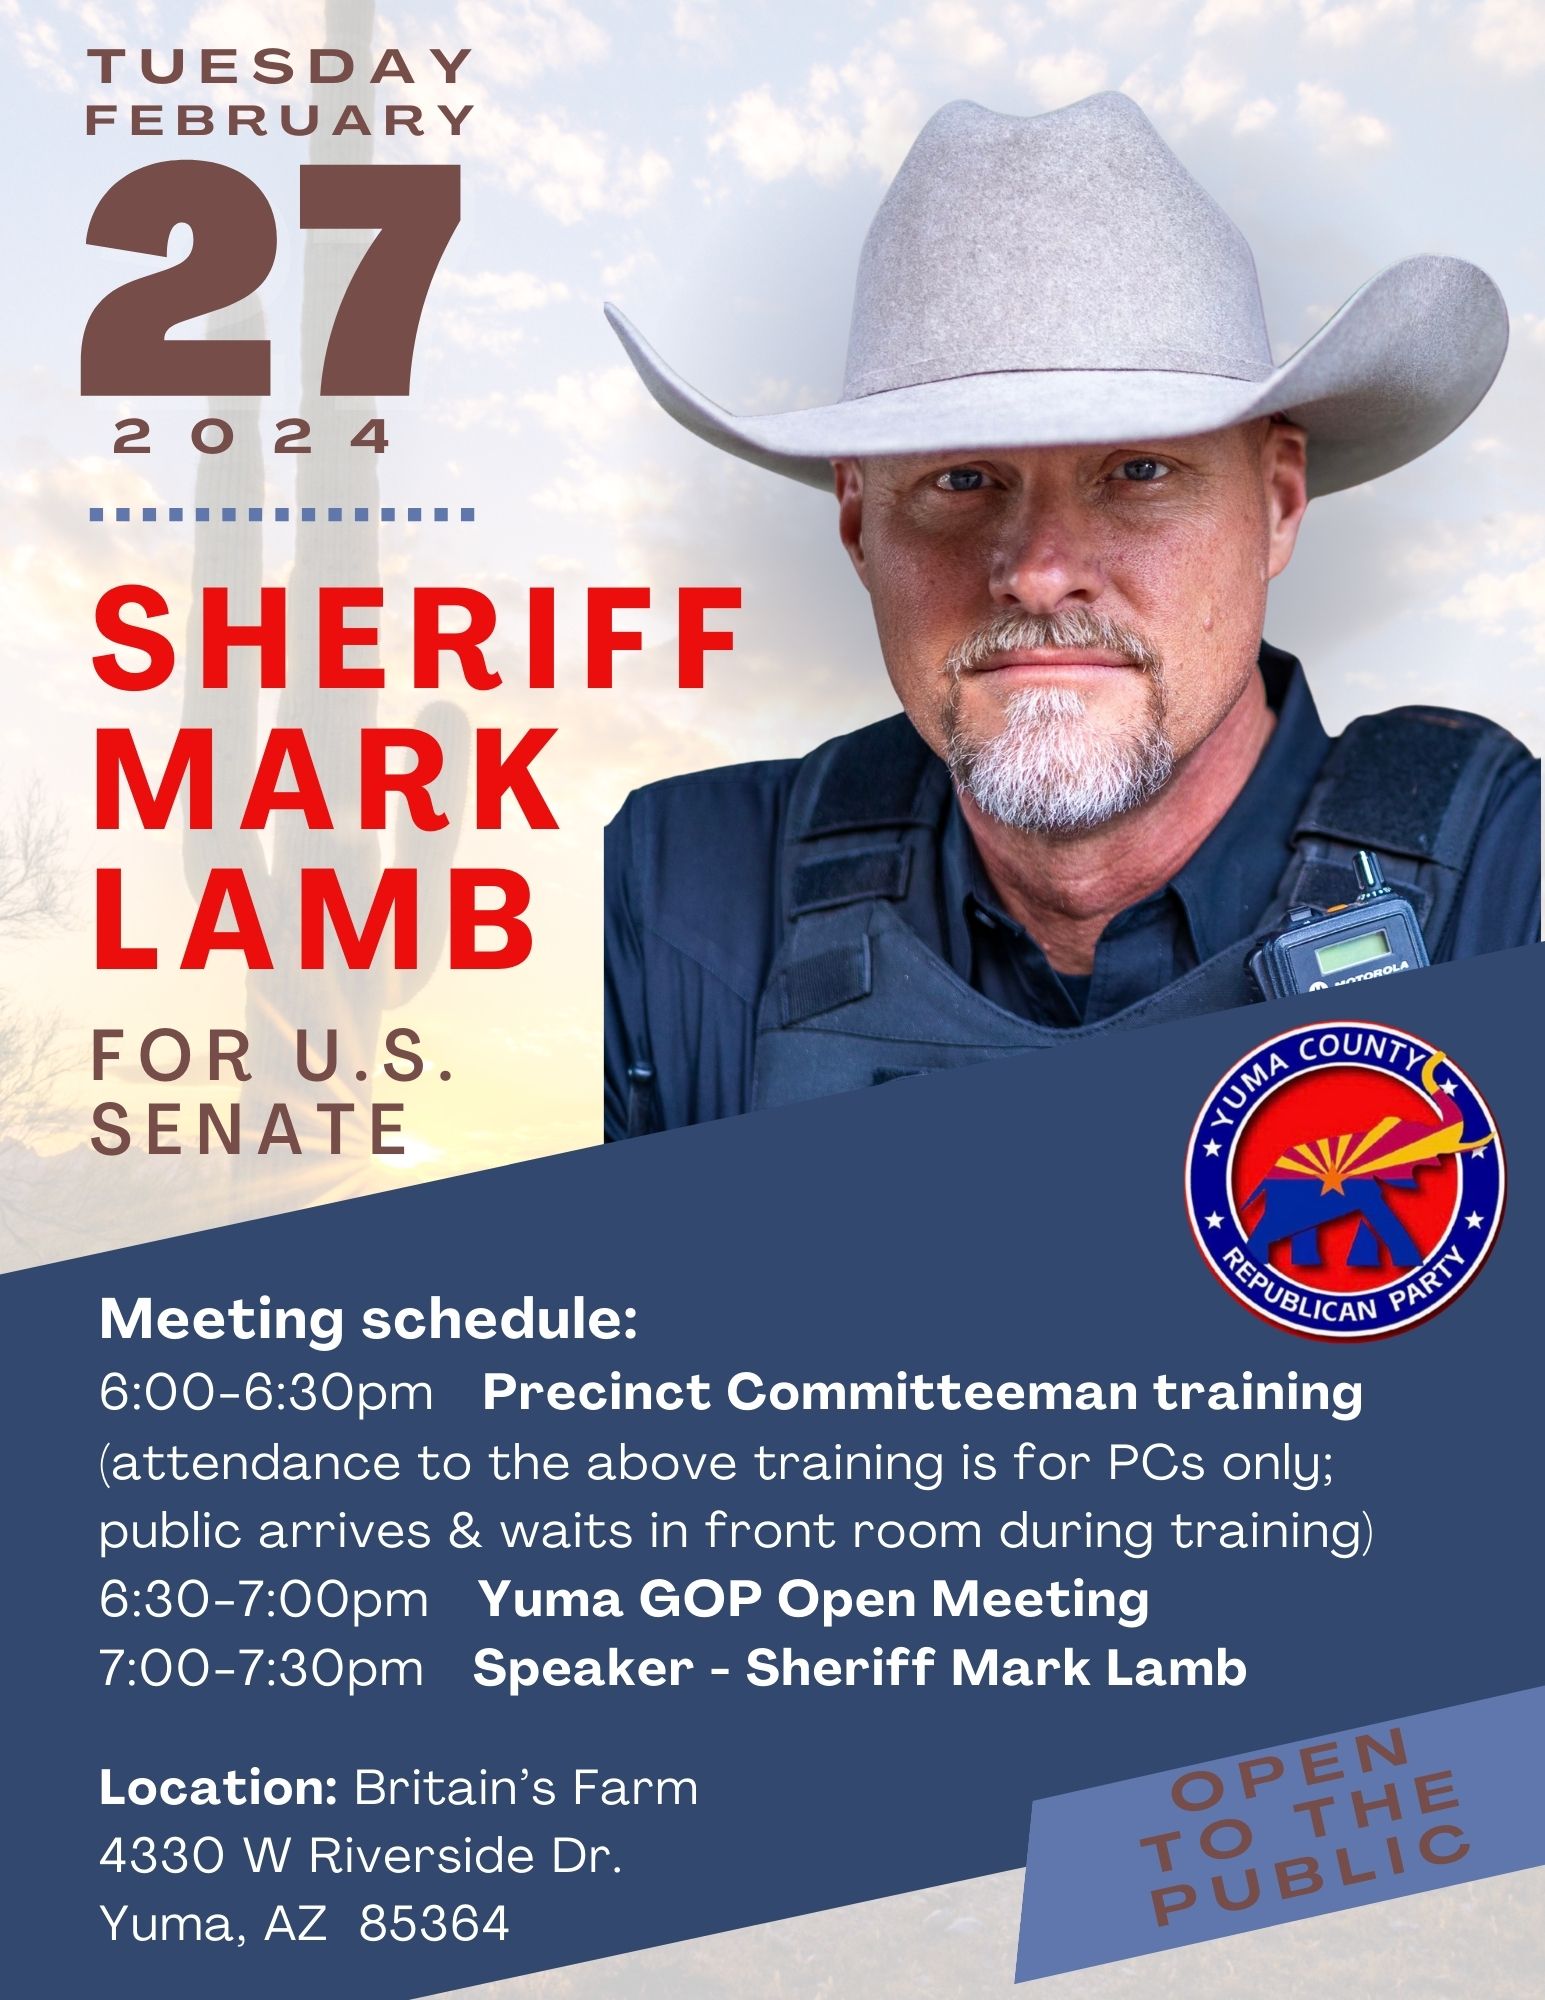 Yuma County GOP Open Meeting - NOTE: Speaker Sheriff Lamb & Change of venue!